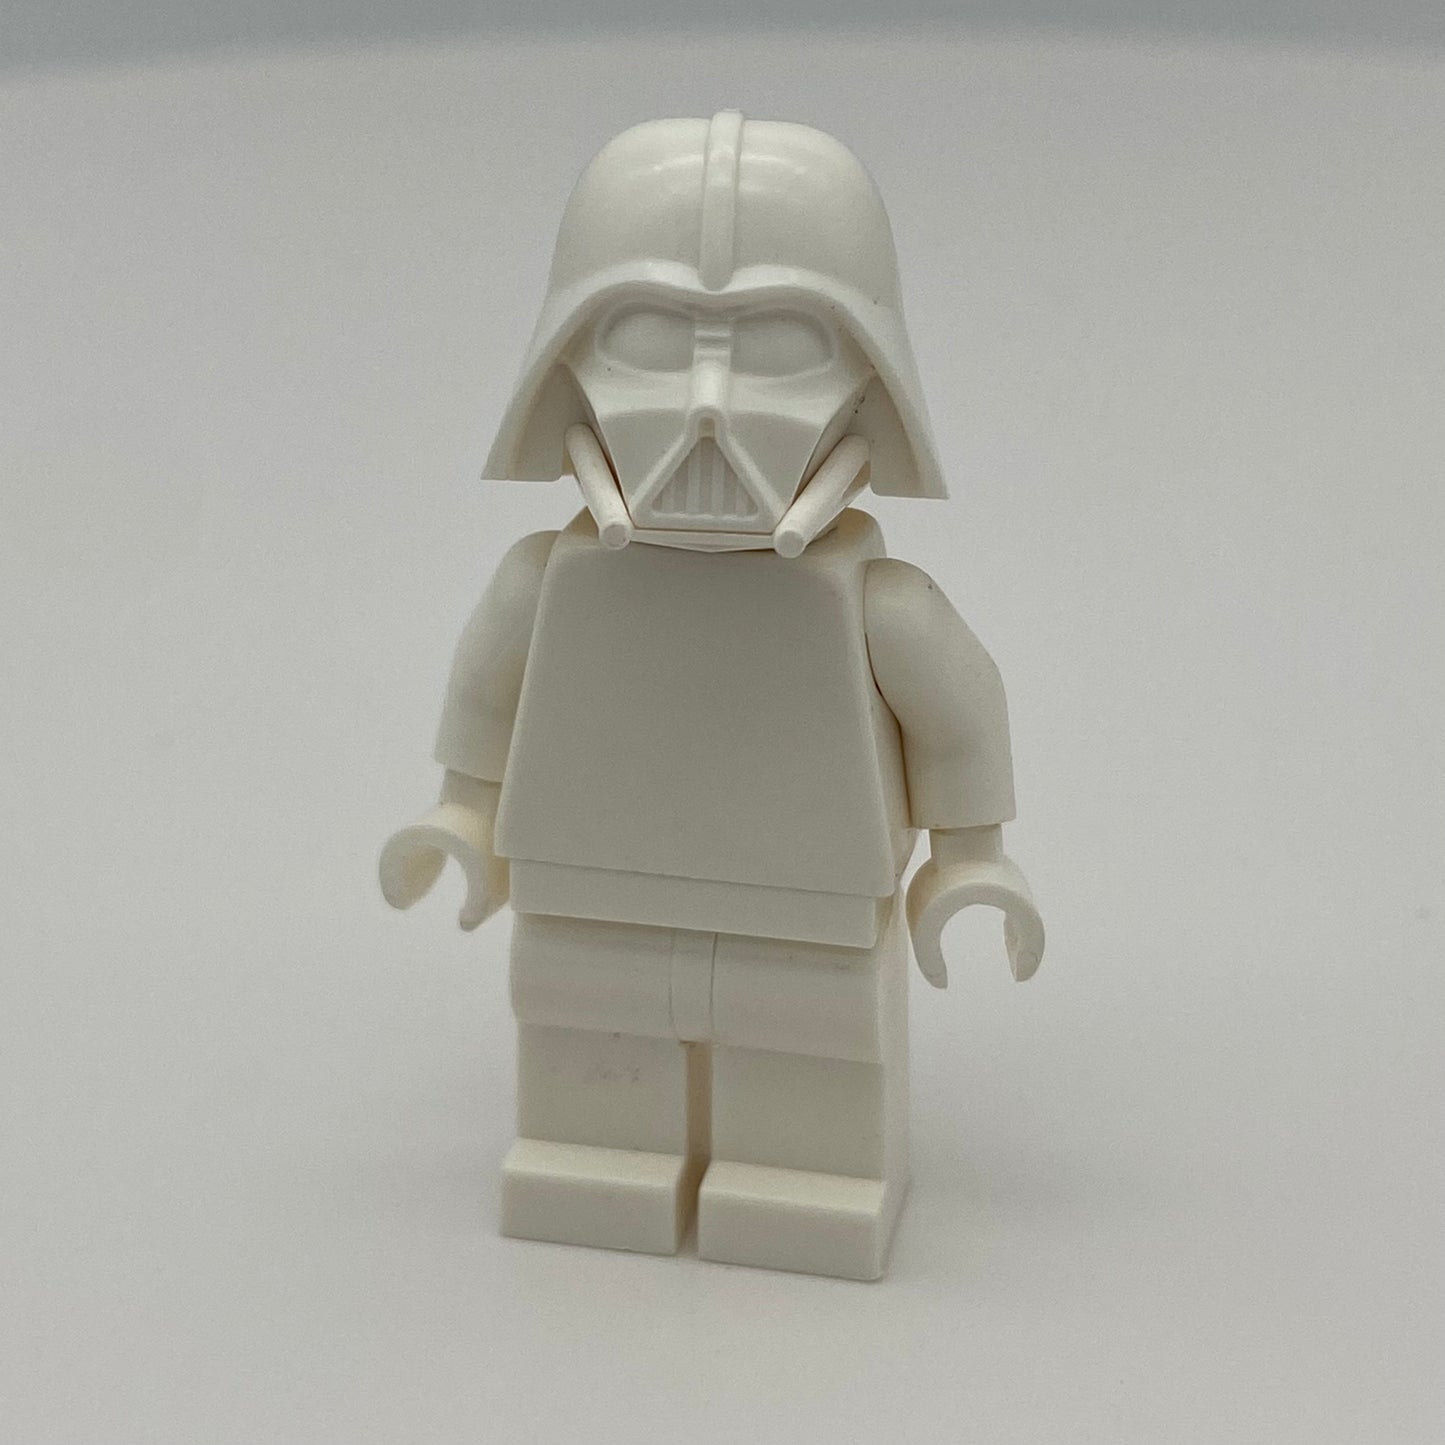 Prototype White Darth Vader Monochrome - Authentic Lego Minifigure